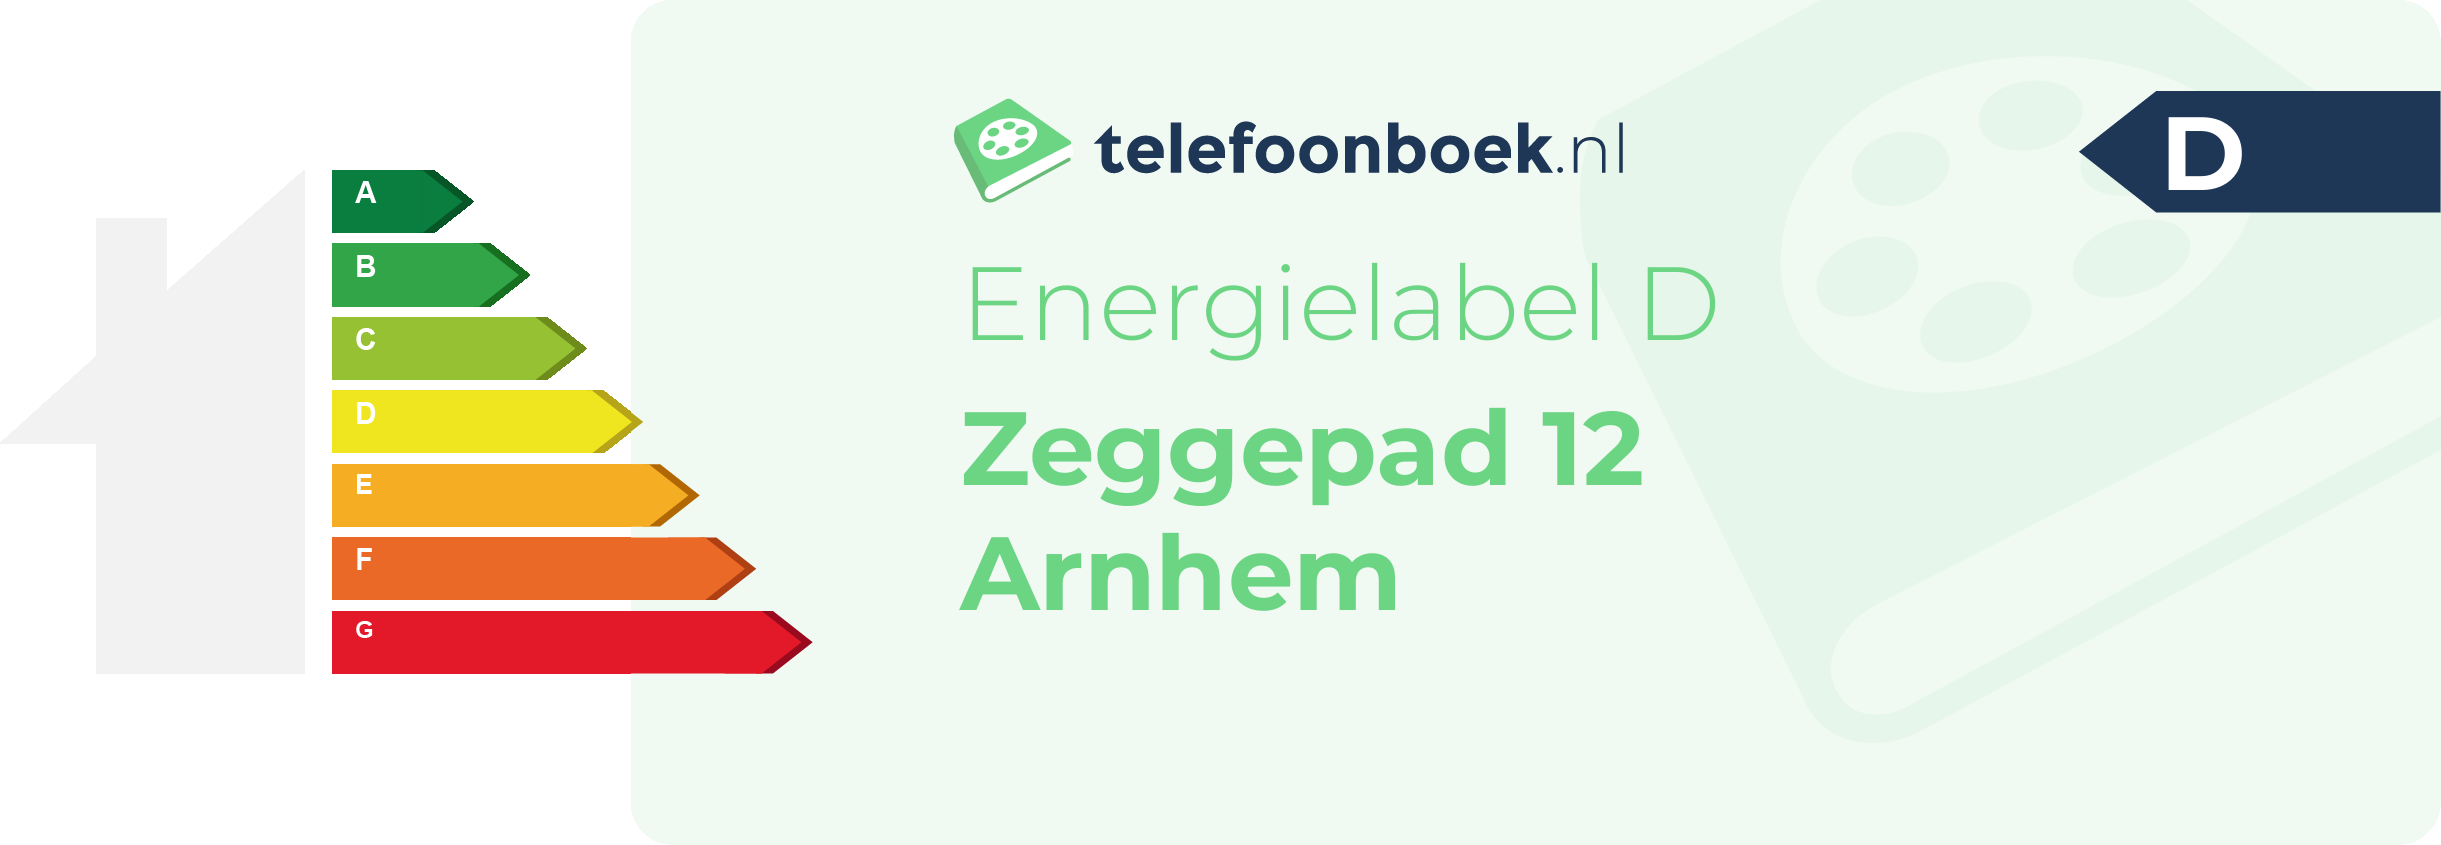 Energielabel Zeggepad 12 Arnhem